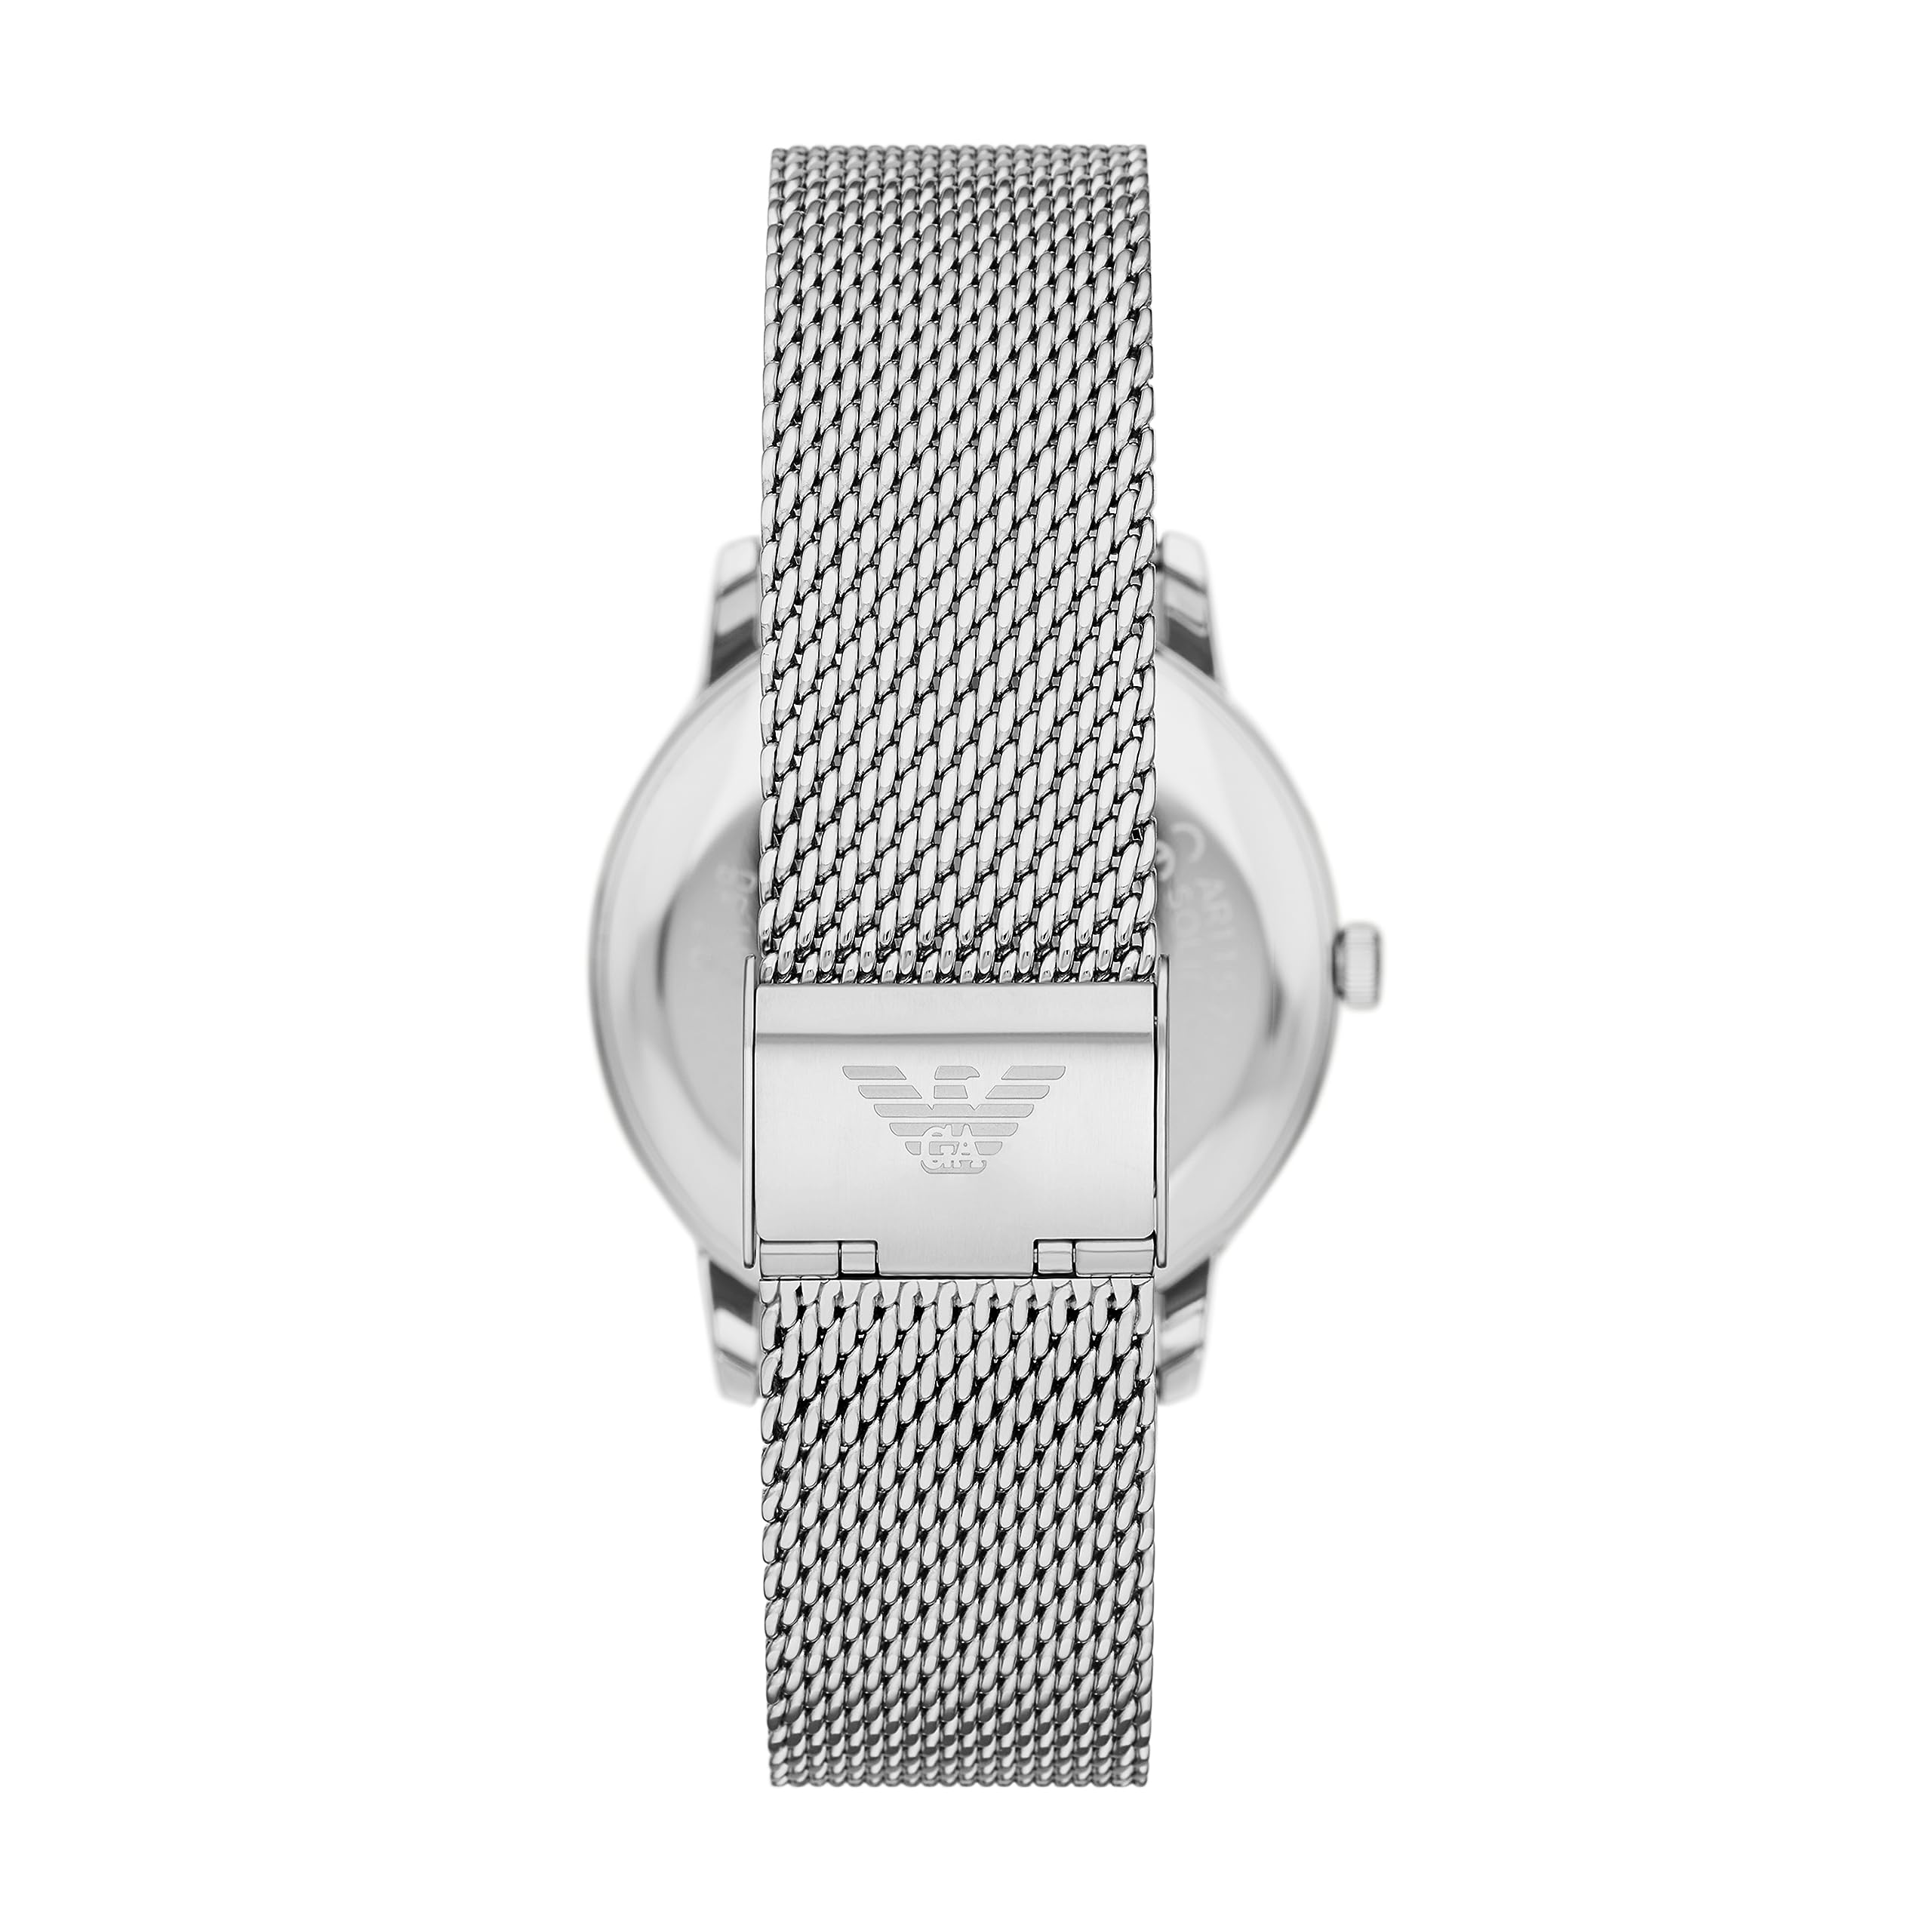 Emporio Armani Men's Stainless Steel Dress Watch with Quartz Movement